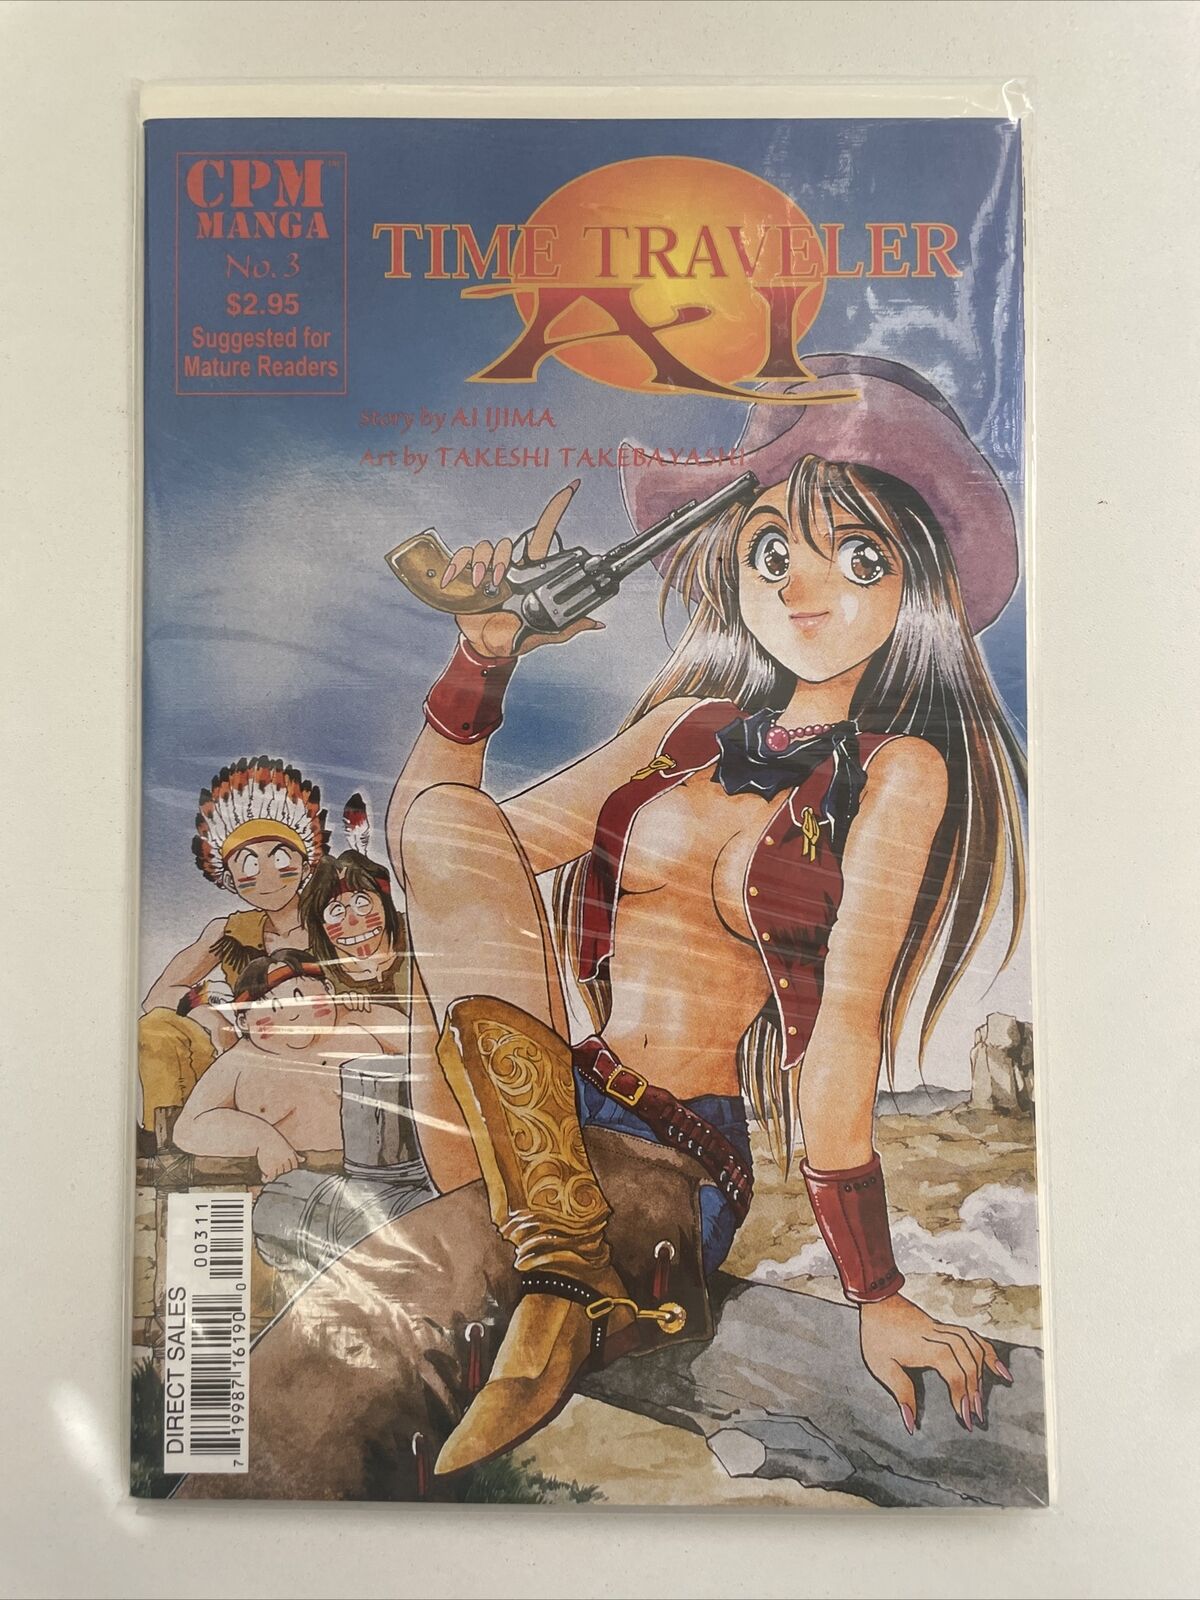 Time Traveler AI #3 CPM Manga Comics Very HTF Mature Readers Sexy Risque Cover